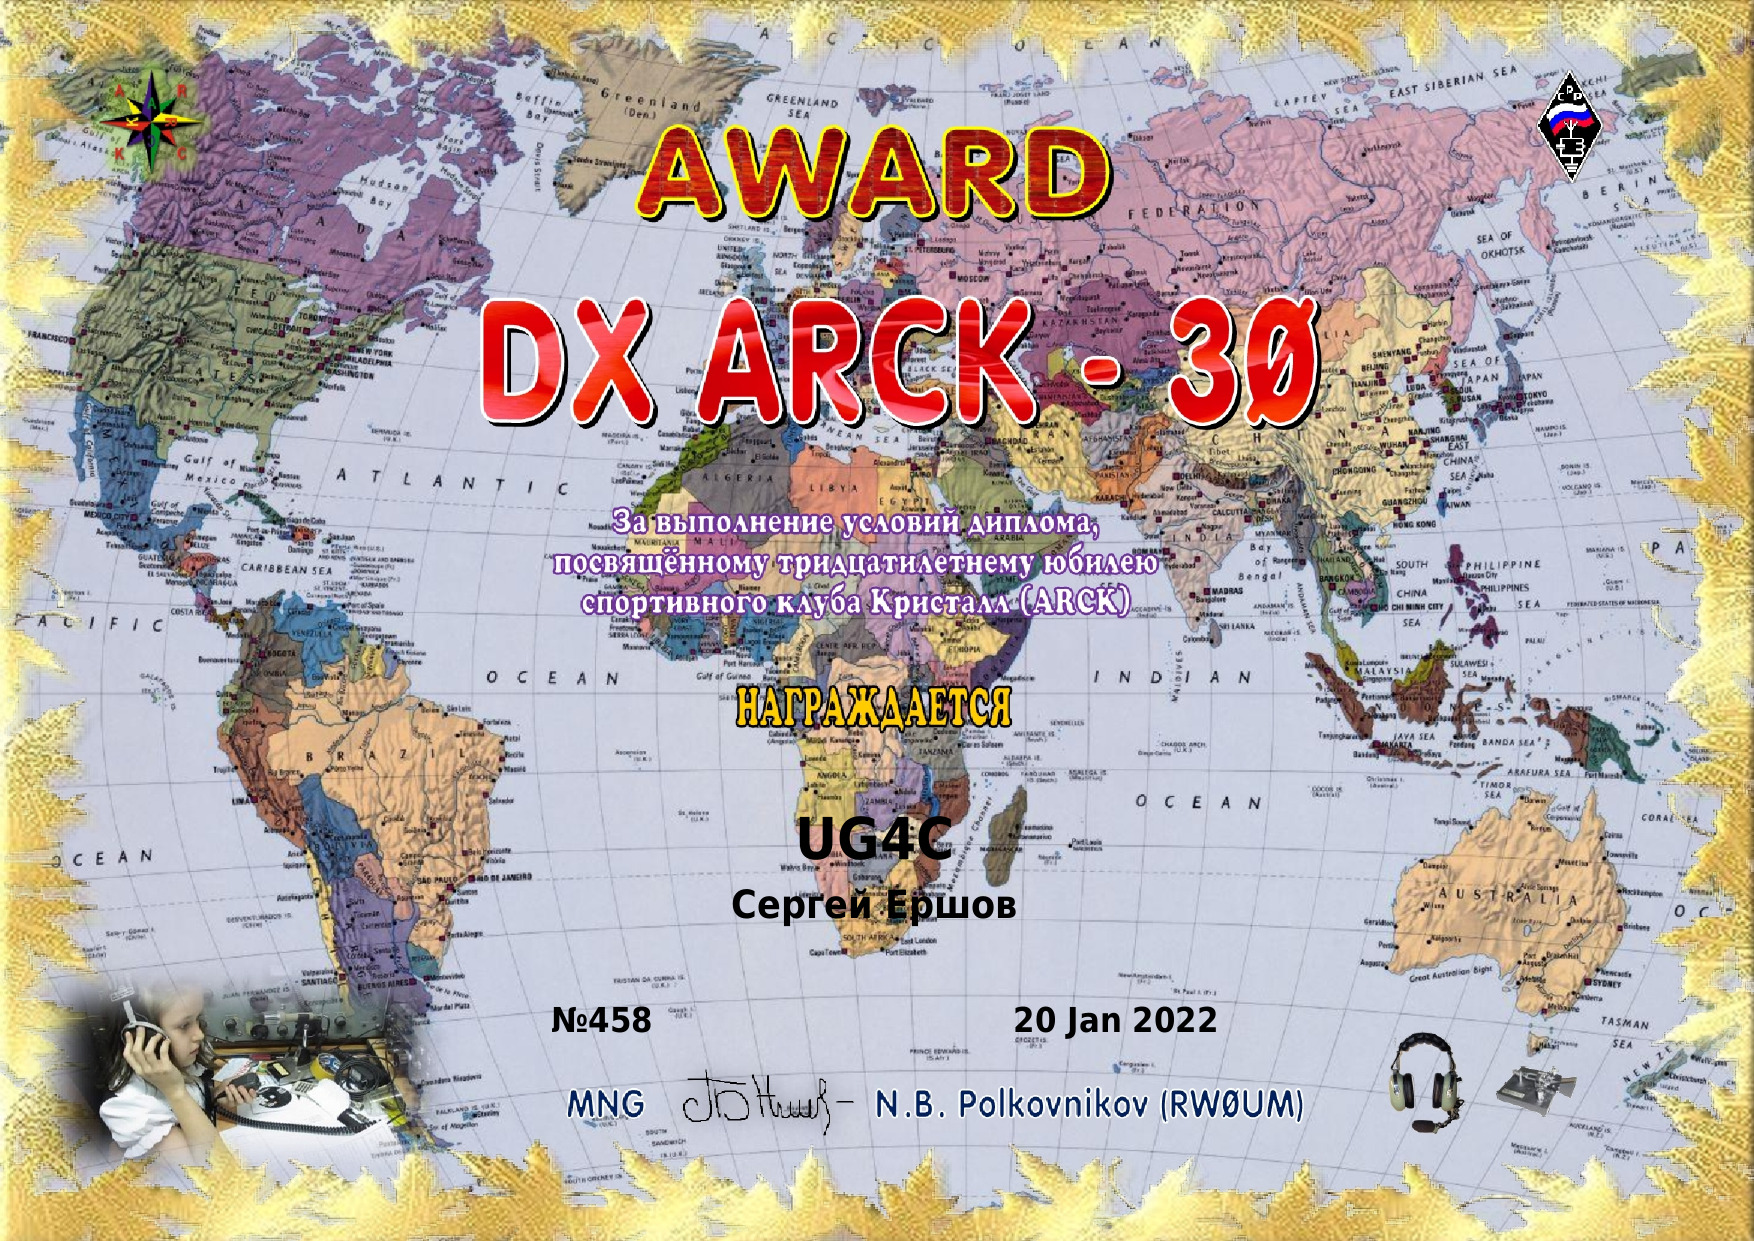 DX ARCK 30